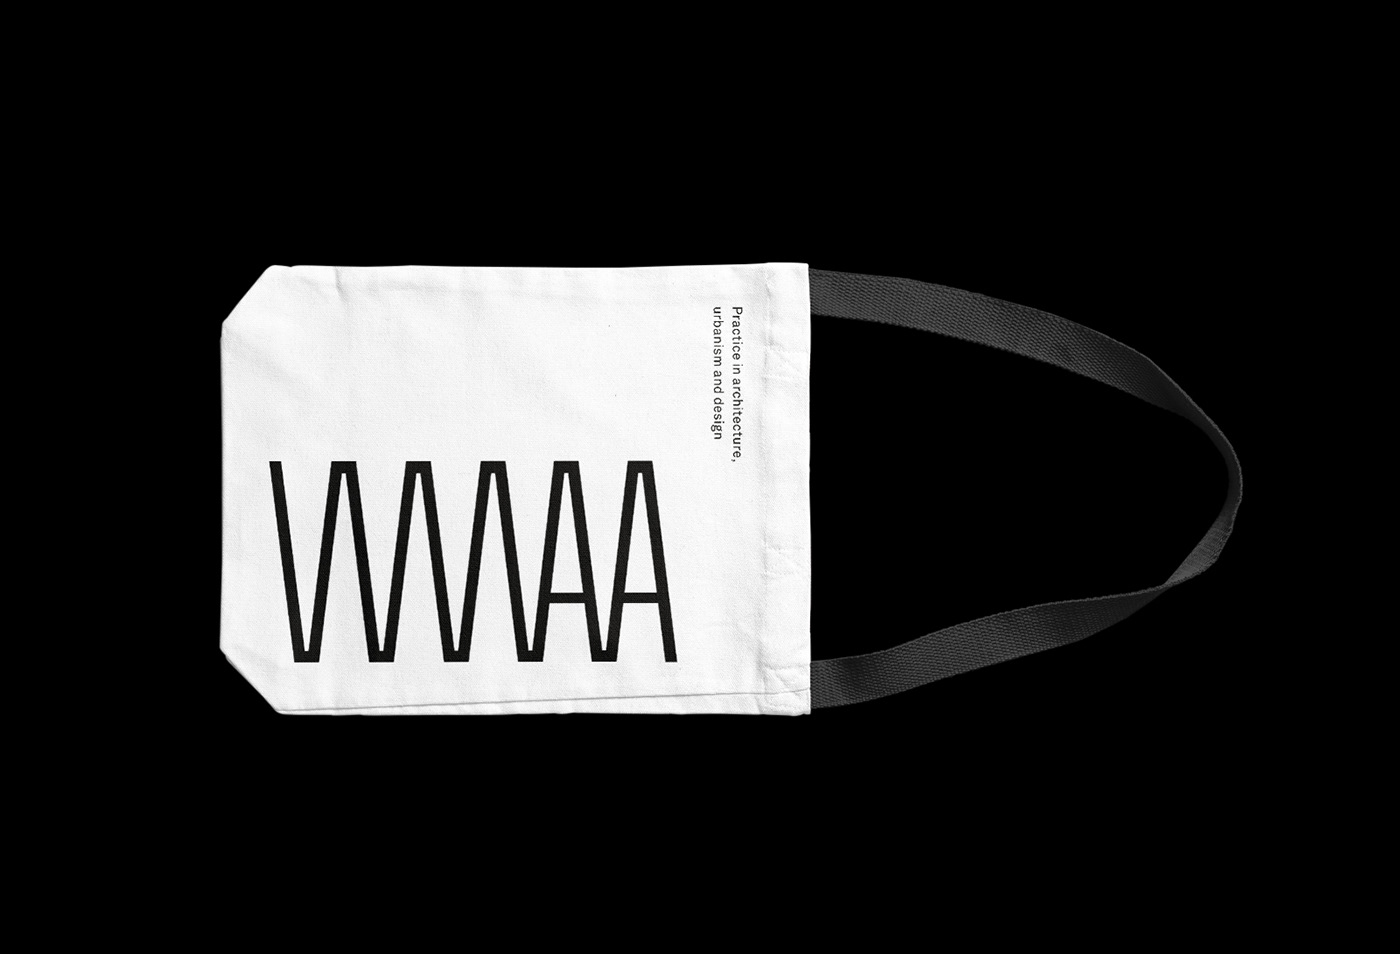 WWAA architecture studio visual identity rebranding logo type graphic design 